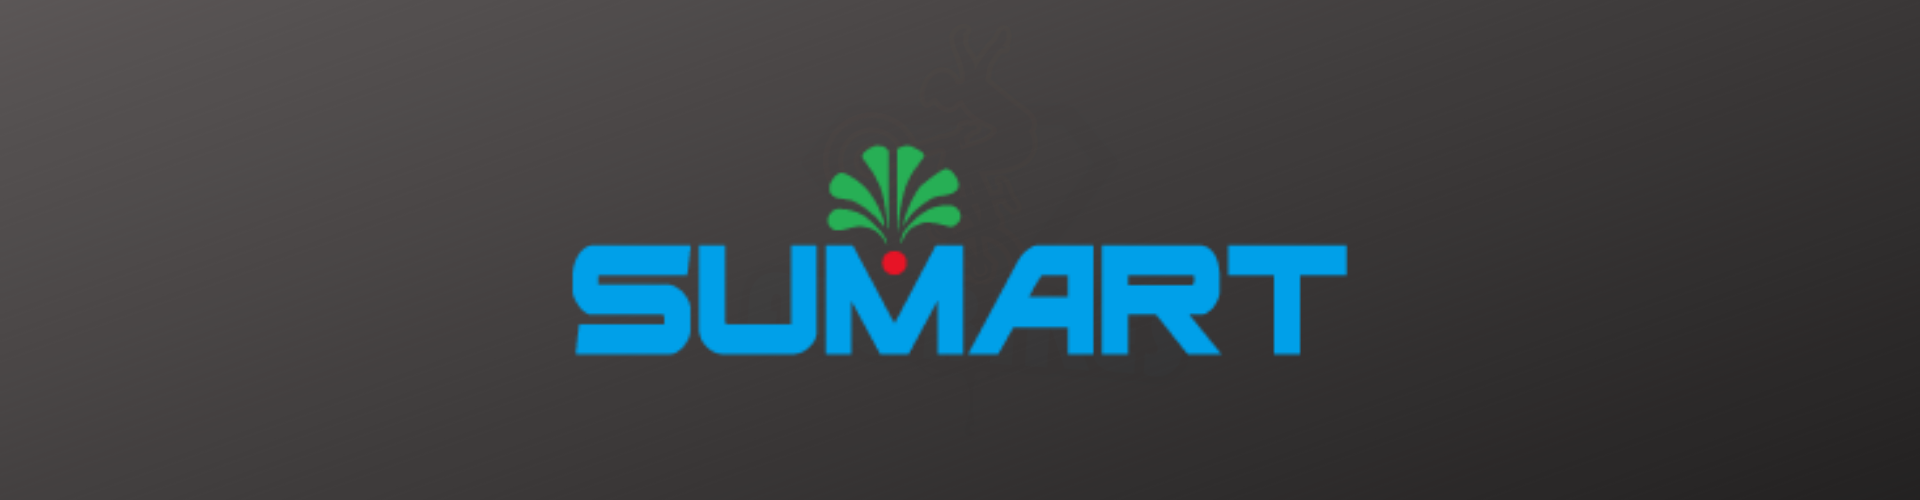 sumart Brand Category